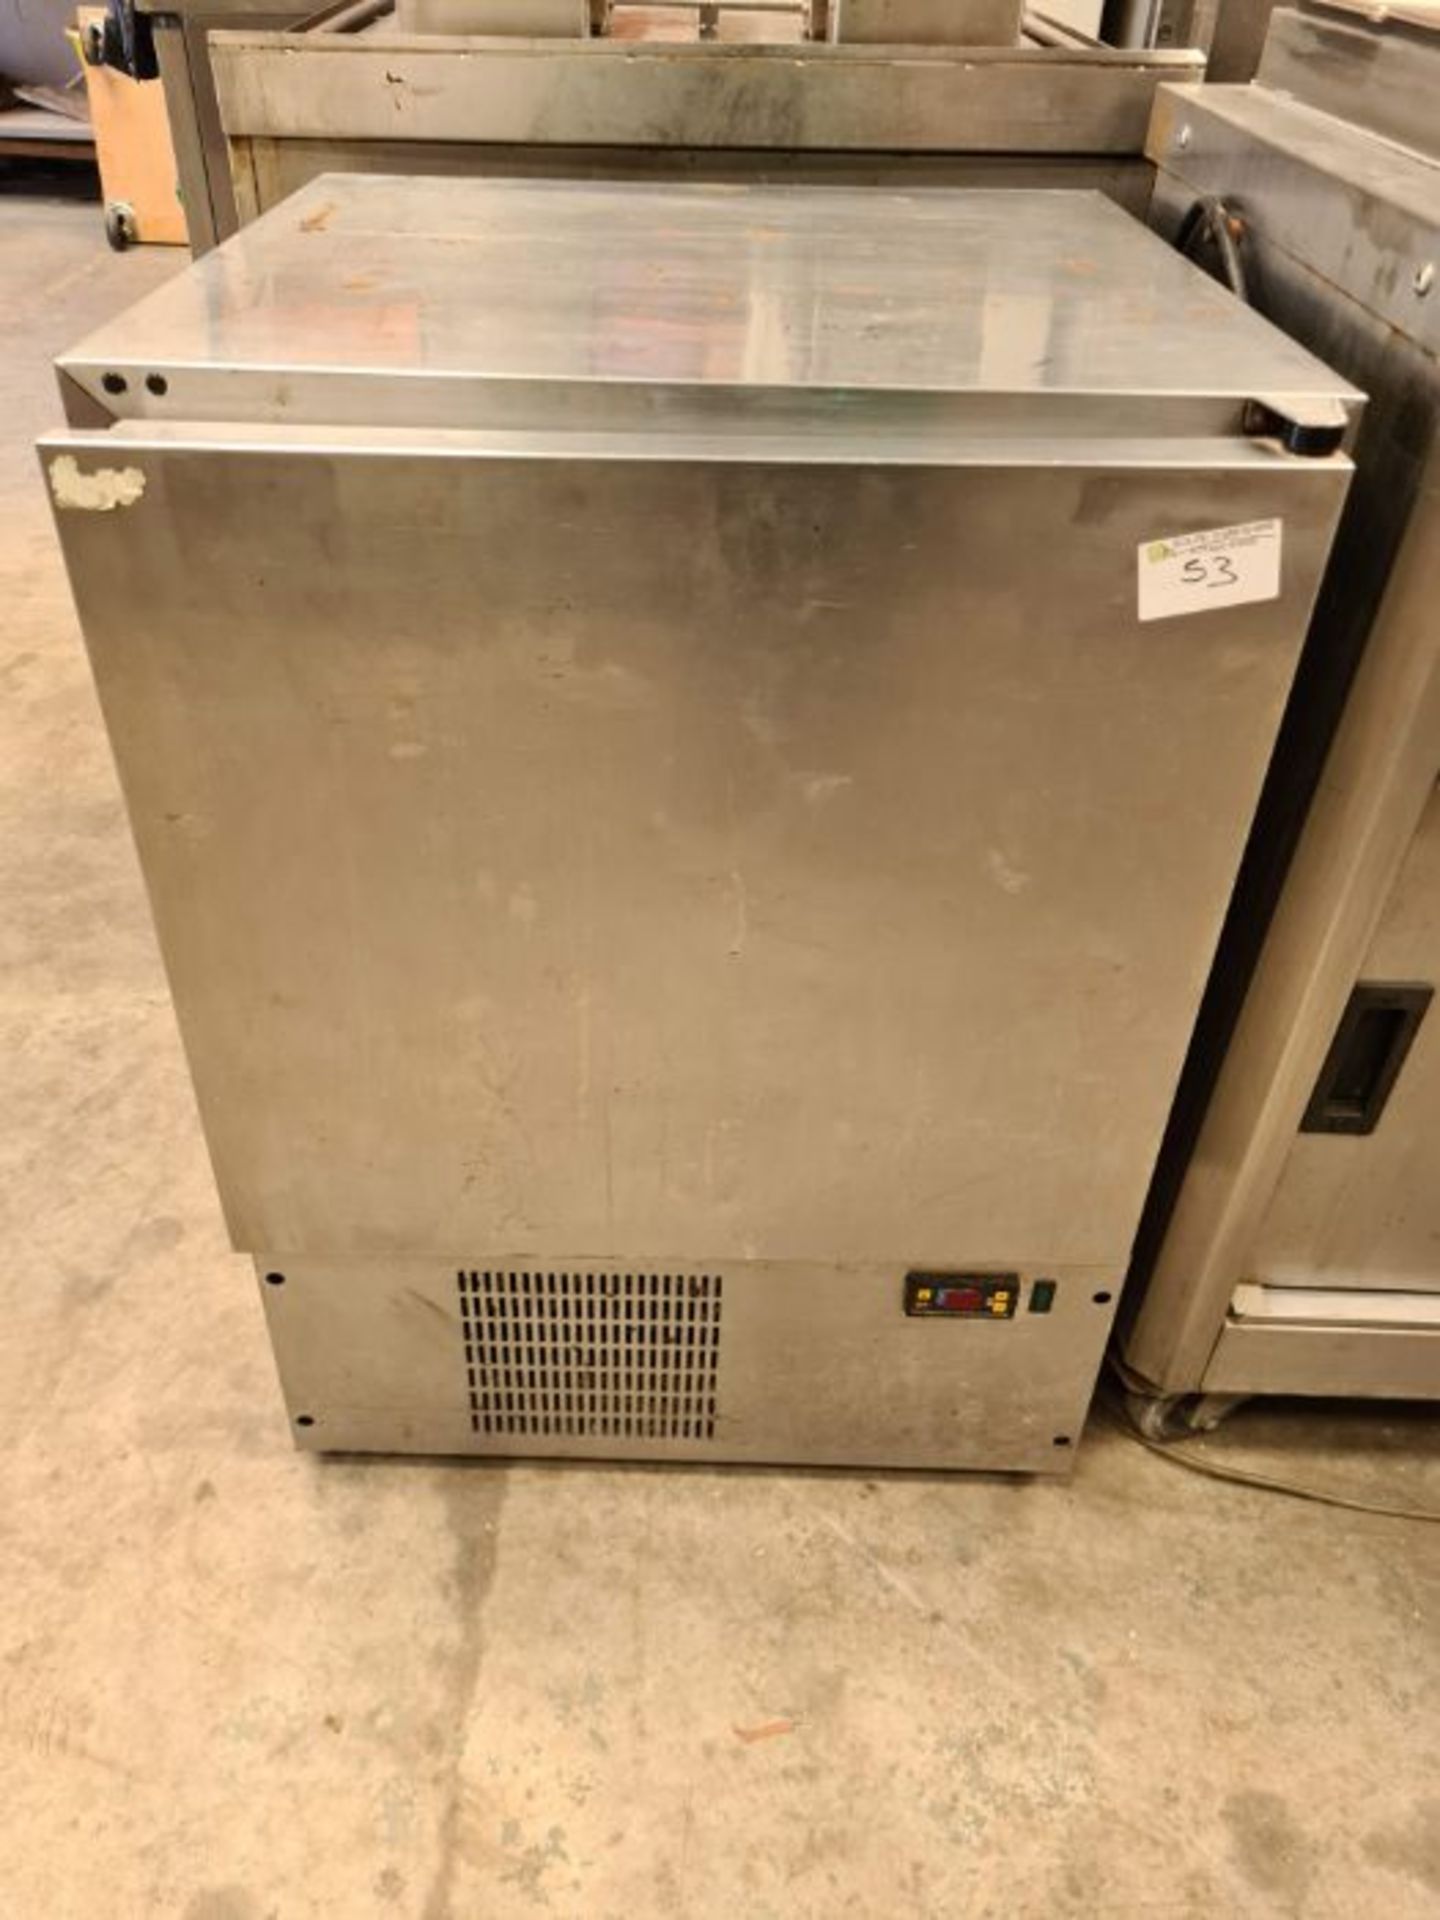 Stainless steel undercounter fridge.